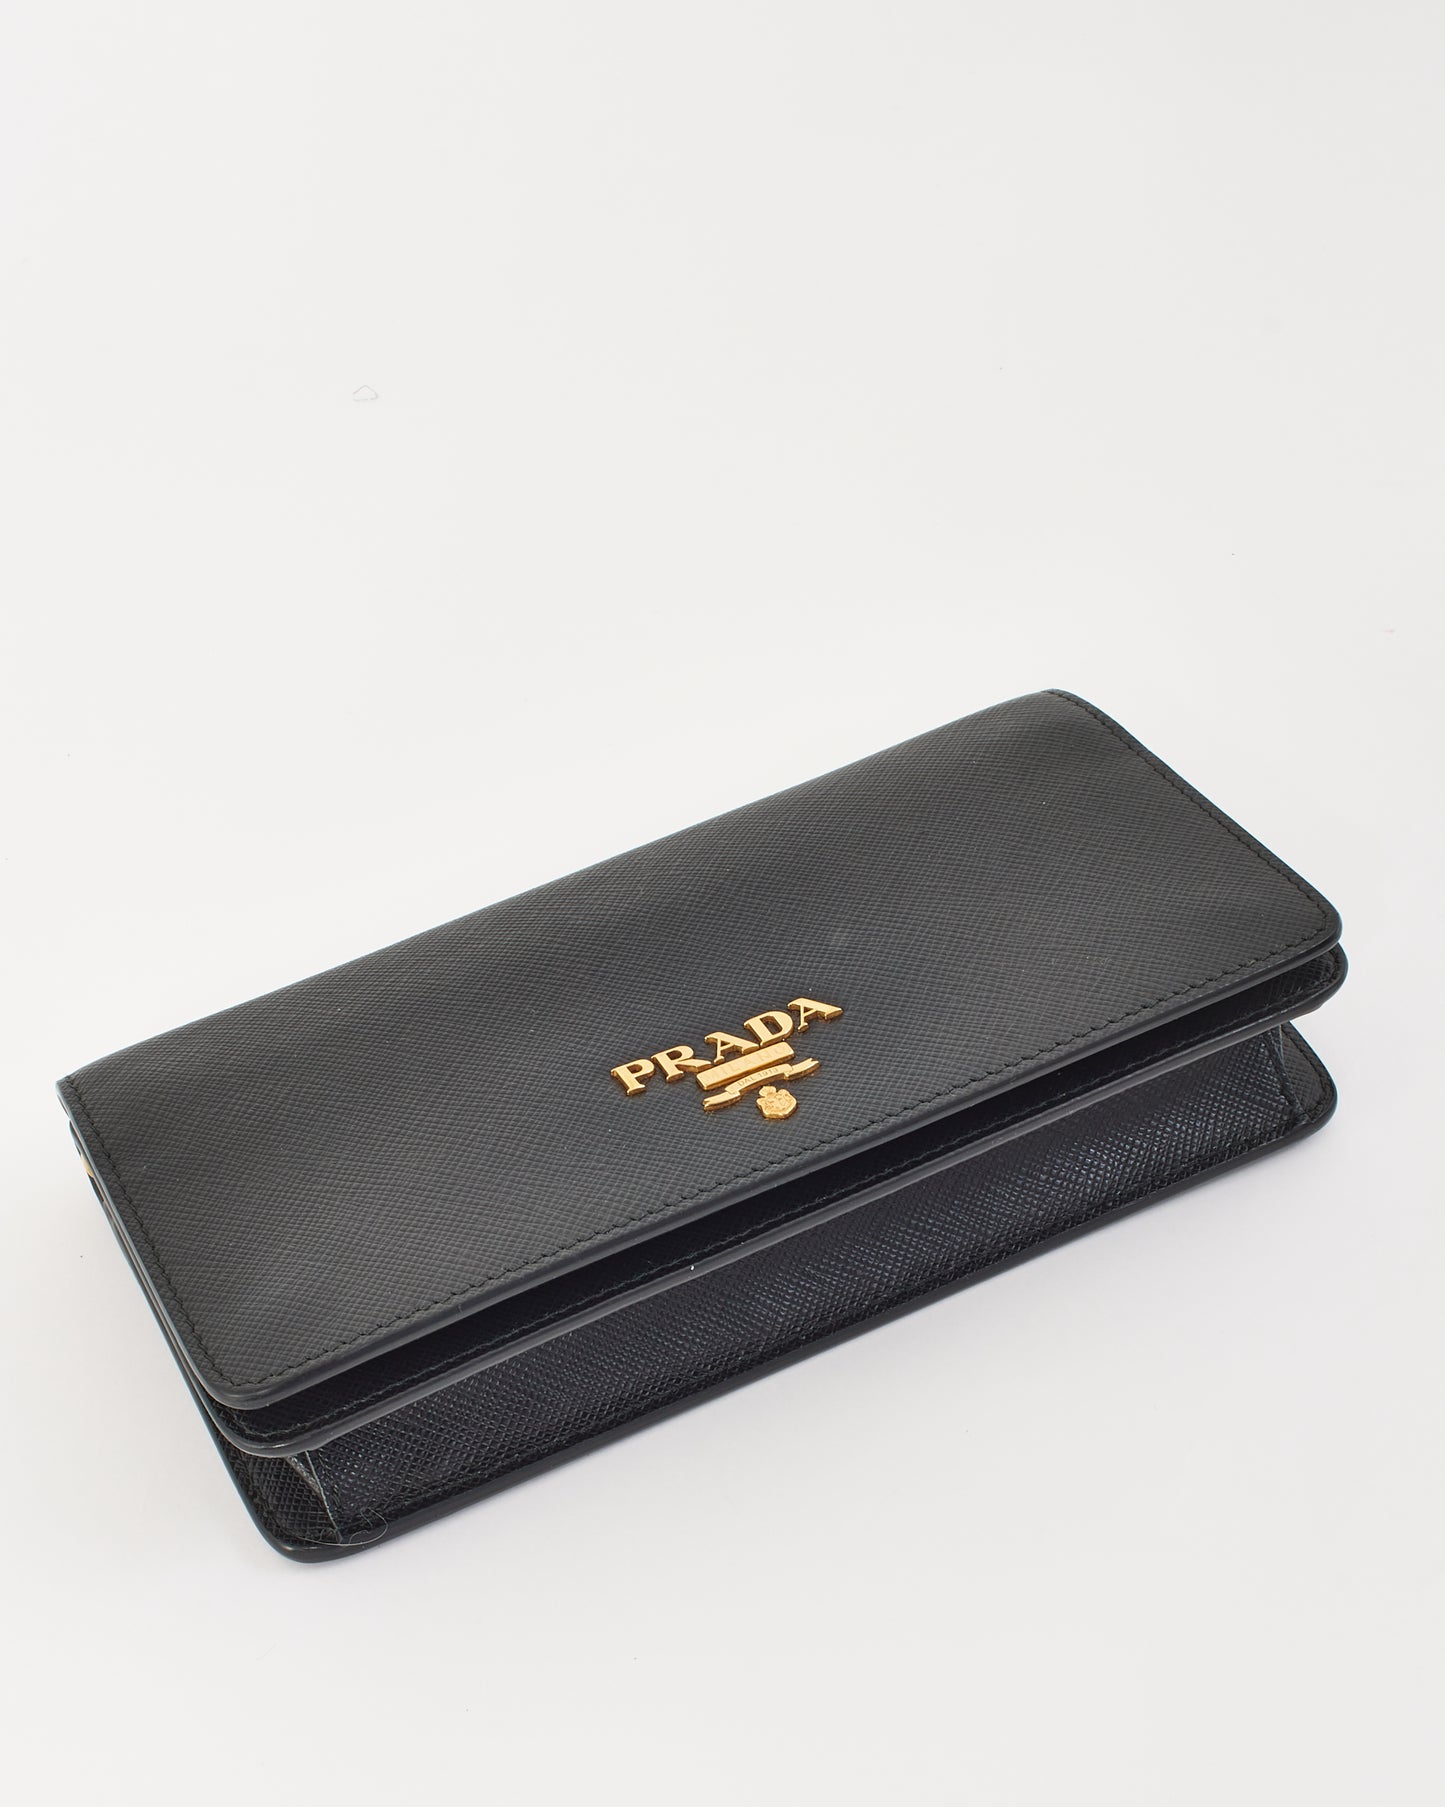 Prada Black Saffiano Leather Logo Wallet on Chain Bag